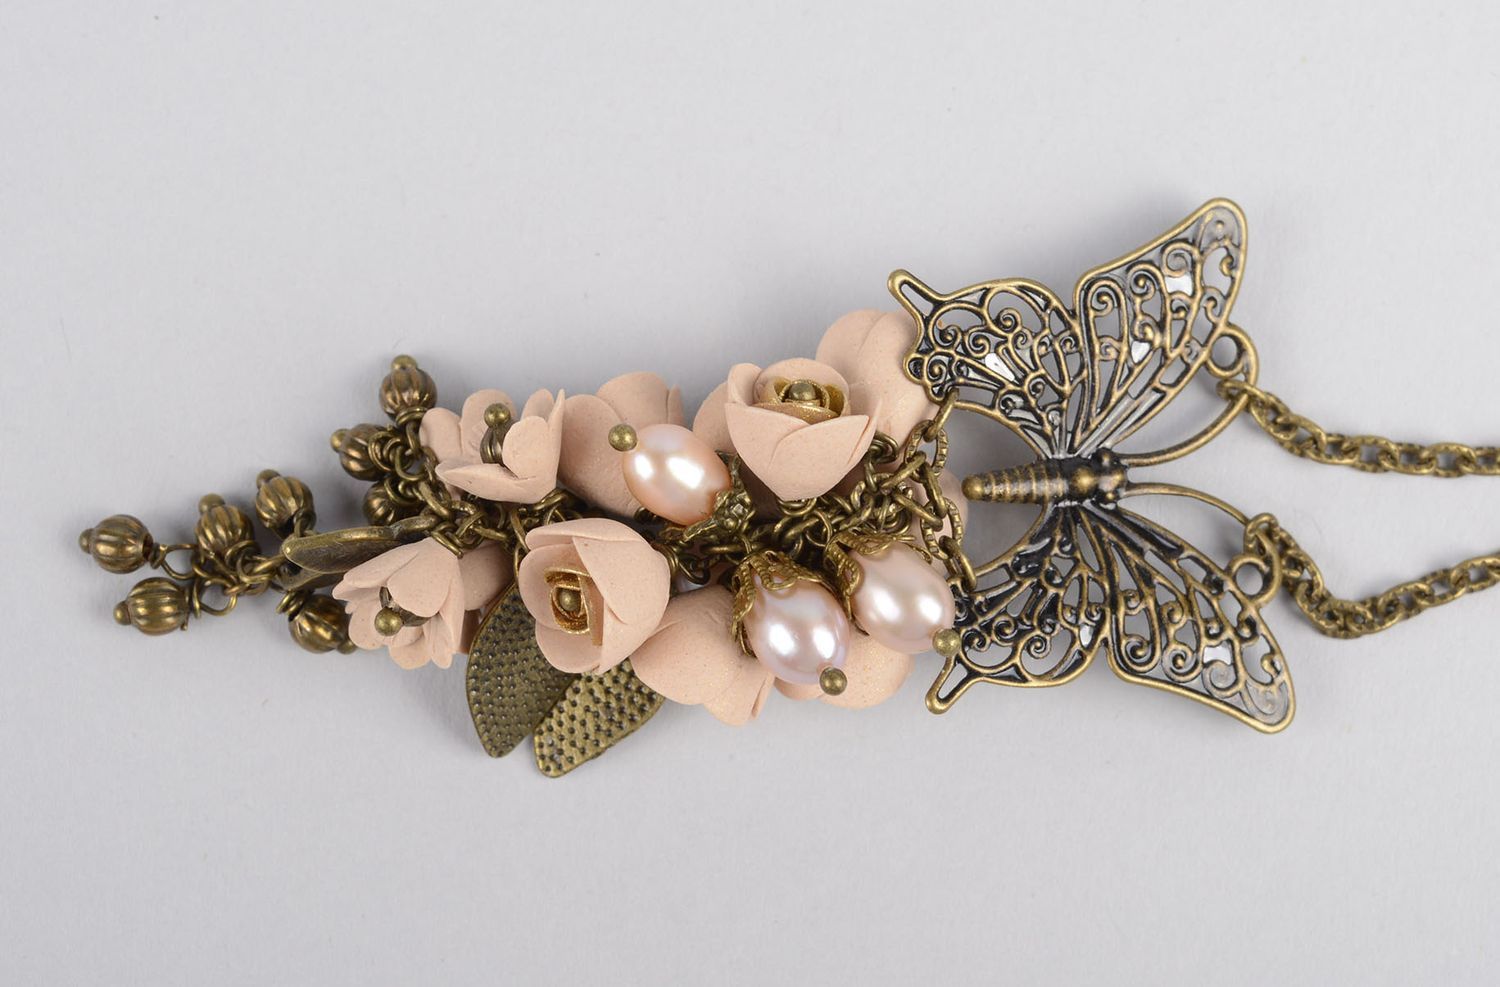 Handmade pendant unusual accessory gift idea clay pendant for women clay jewelry photo 3